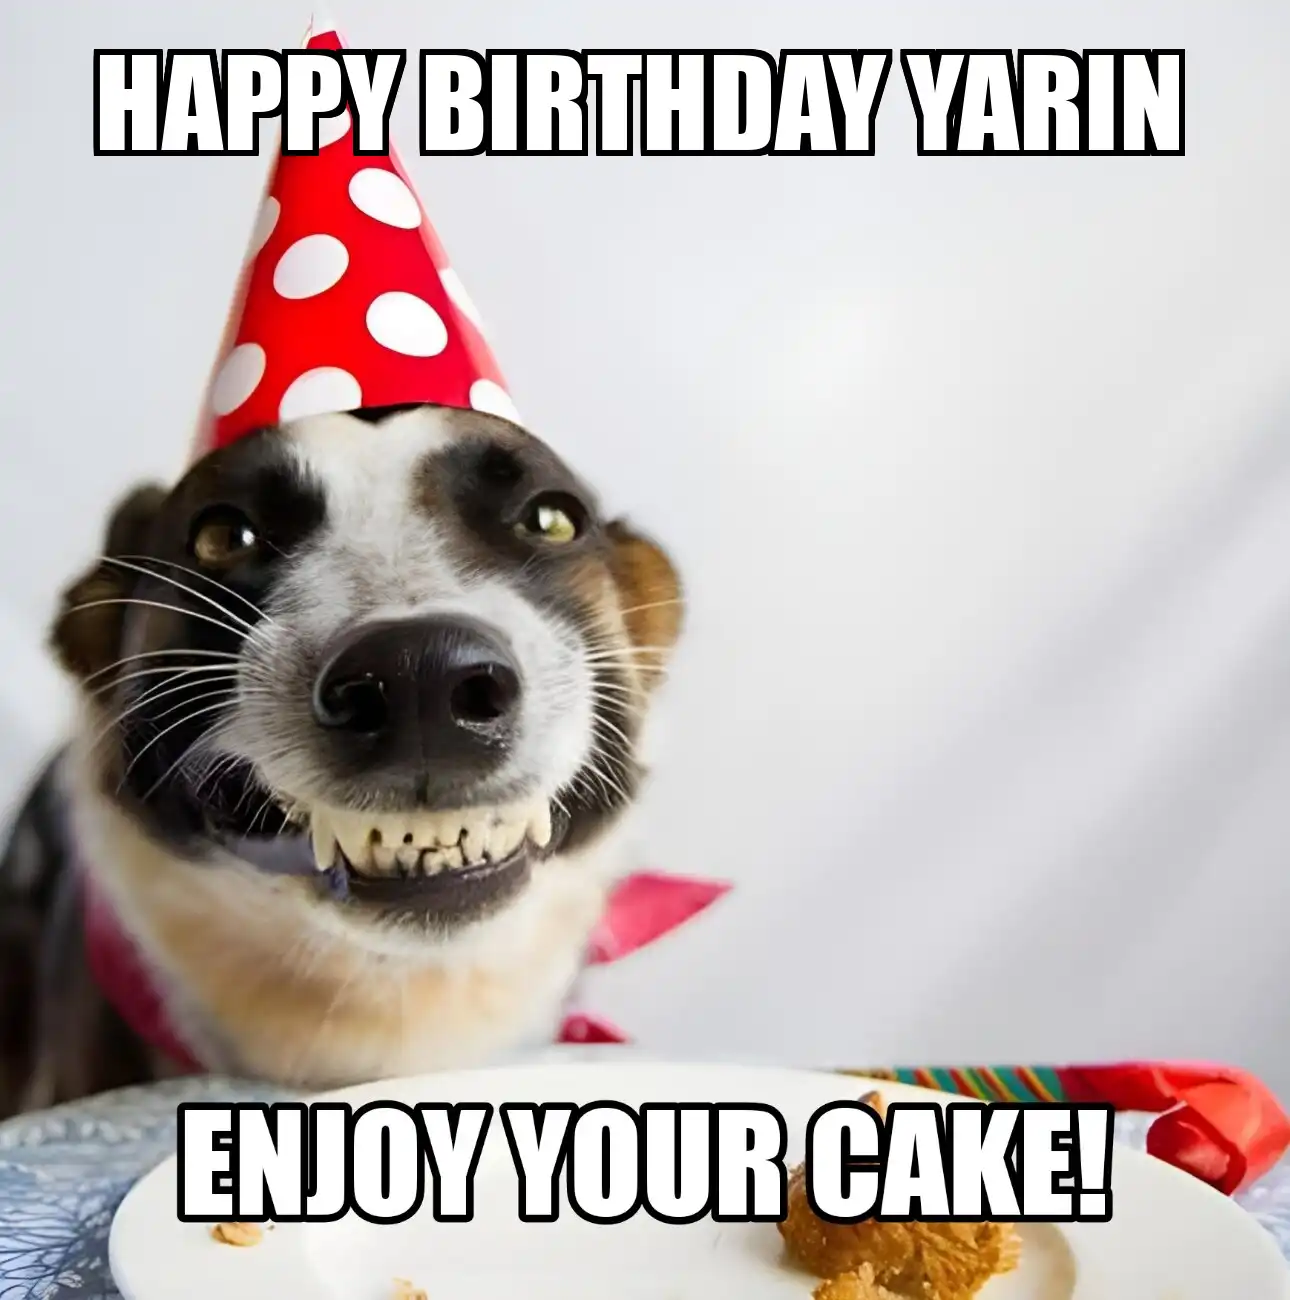 Happy Birthday Yarin Enjoy Your Cake Dog Meme